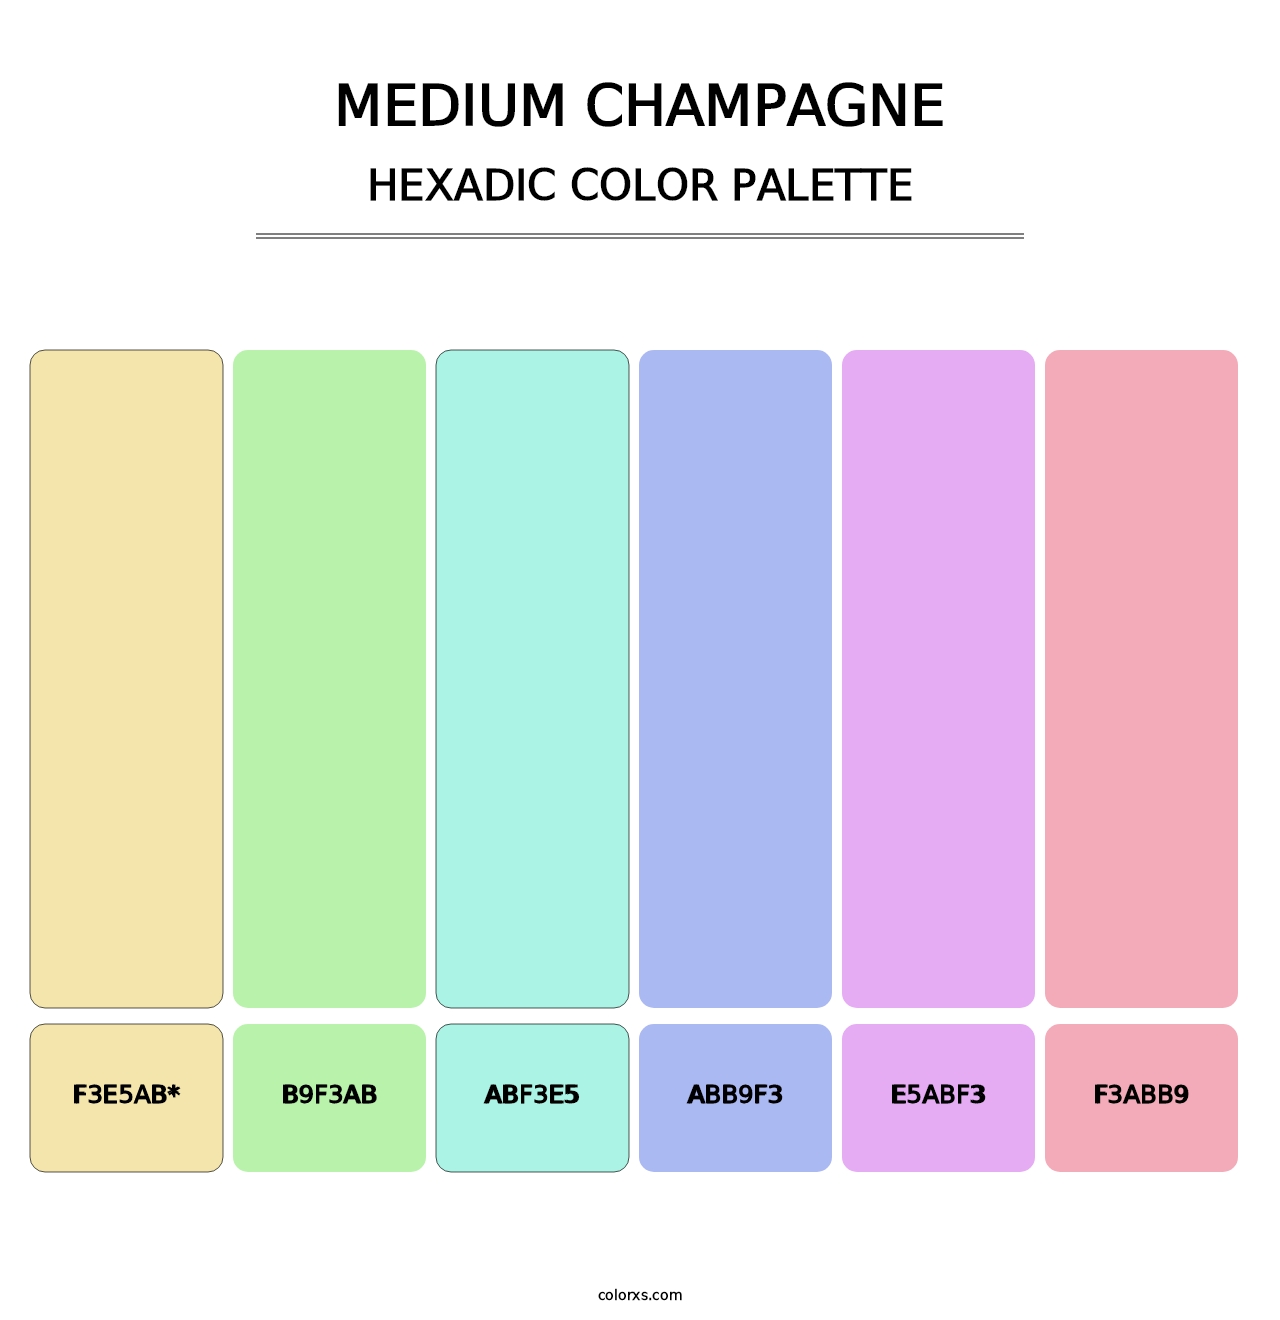 Medium Champagne - Hexadic Color Palette